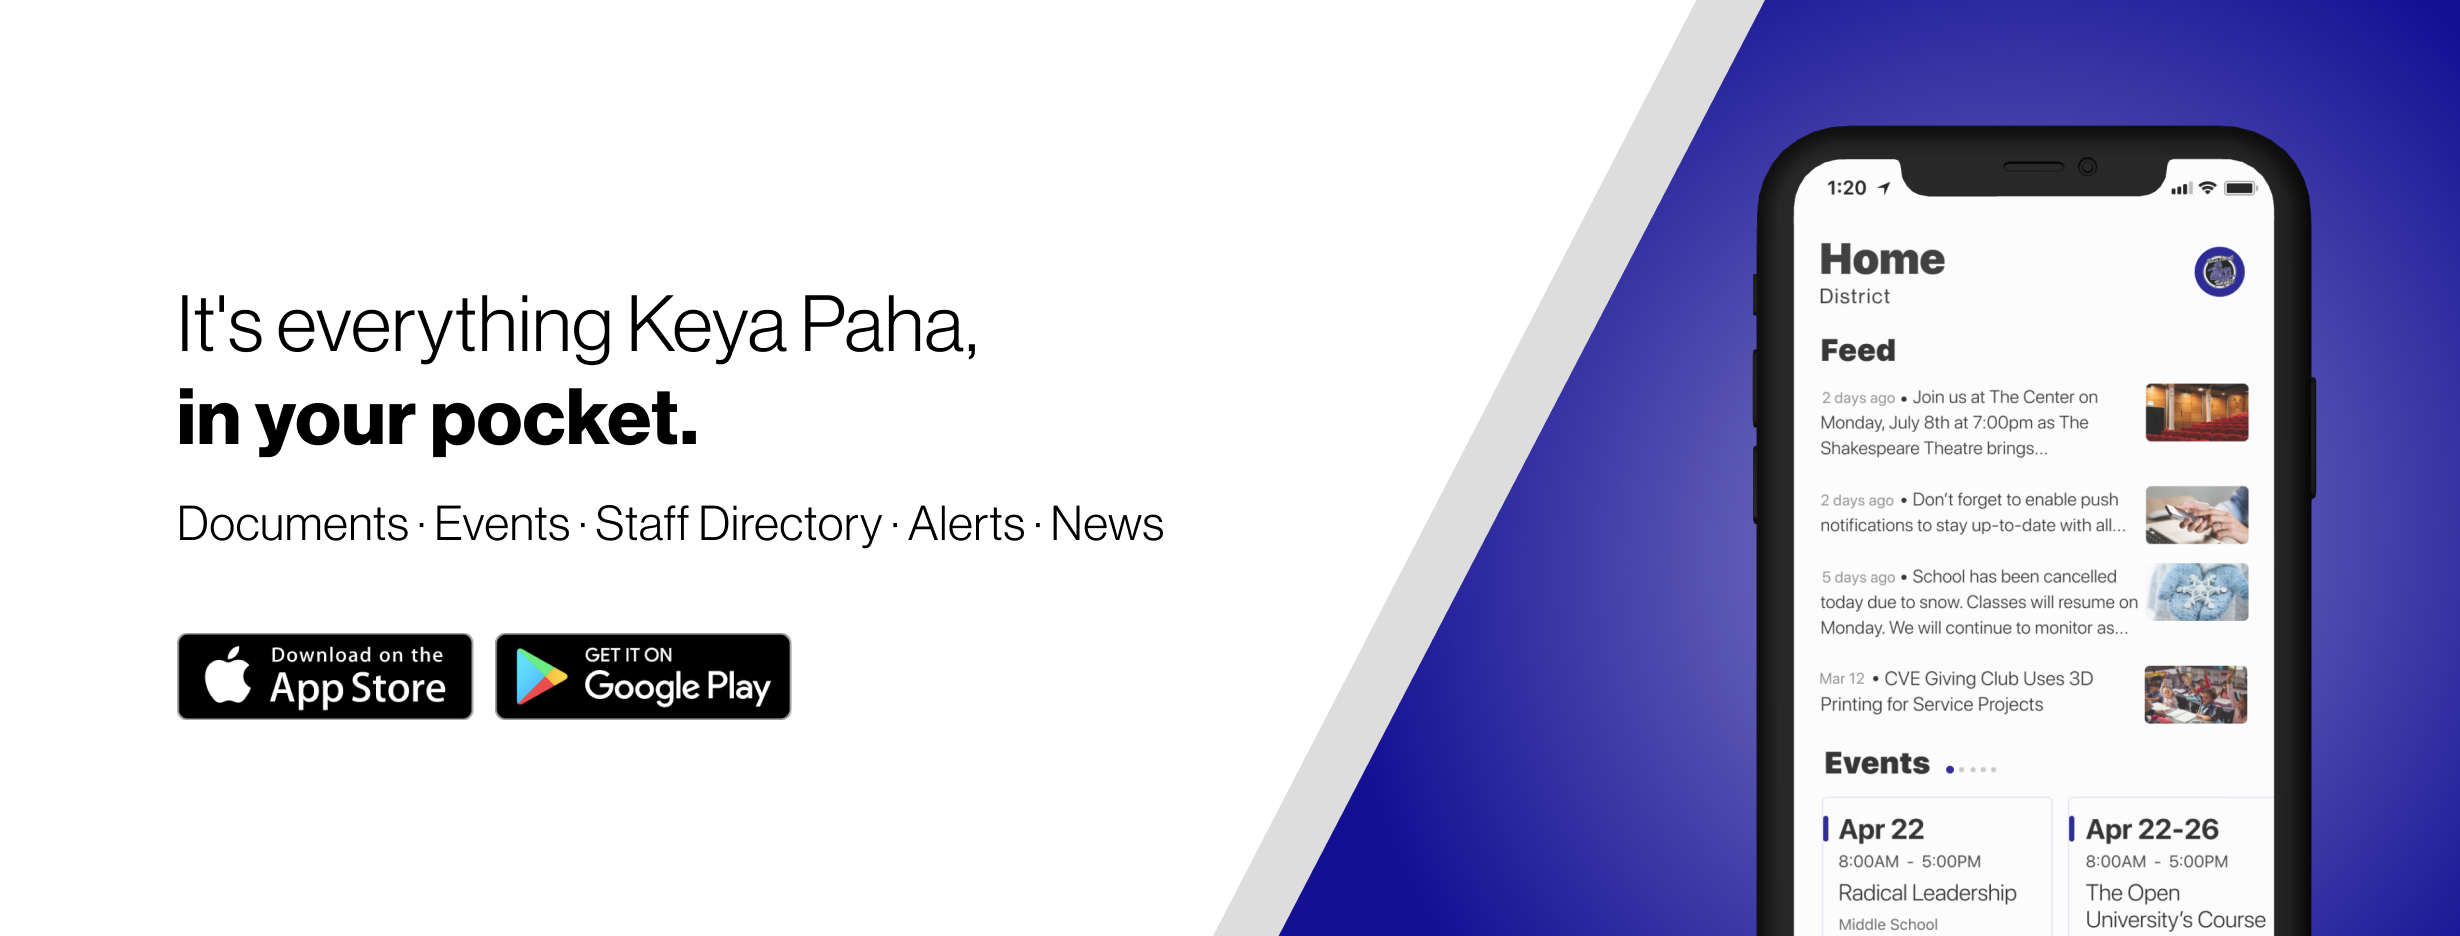 App Notifications for Keya Paha App. Download in the app store or Google Play